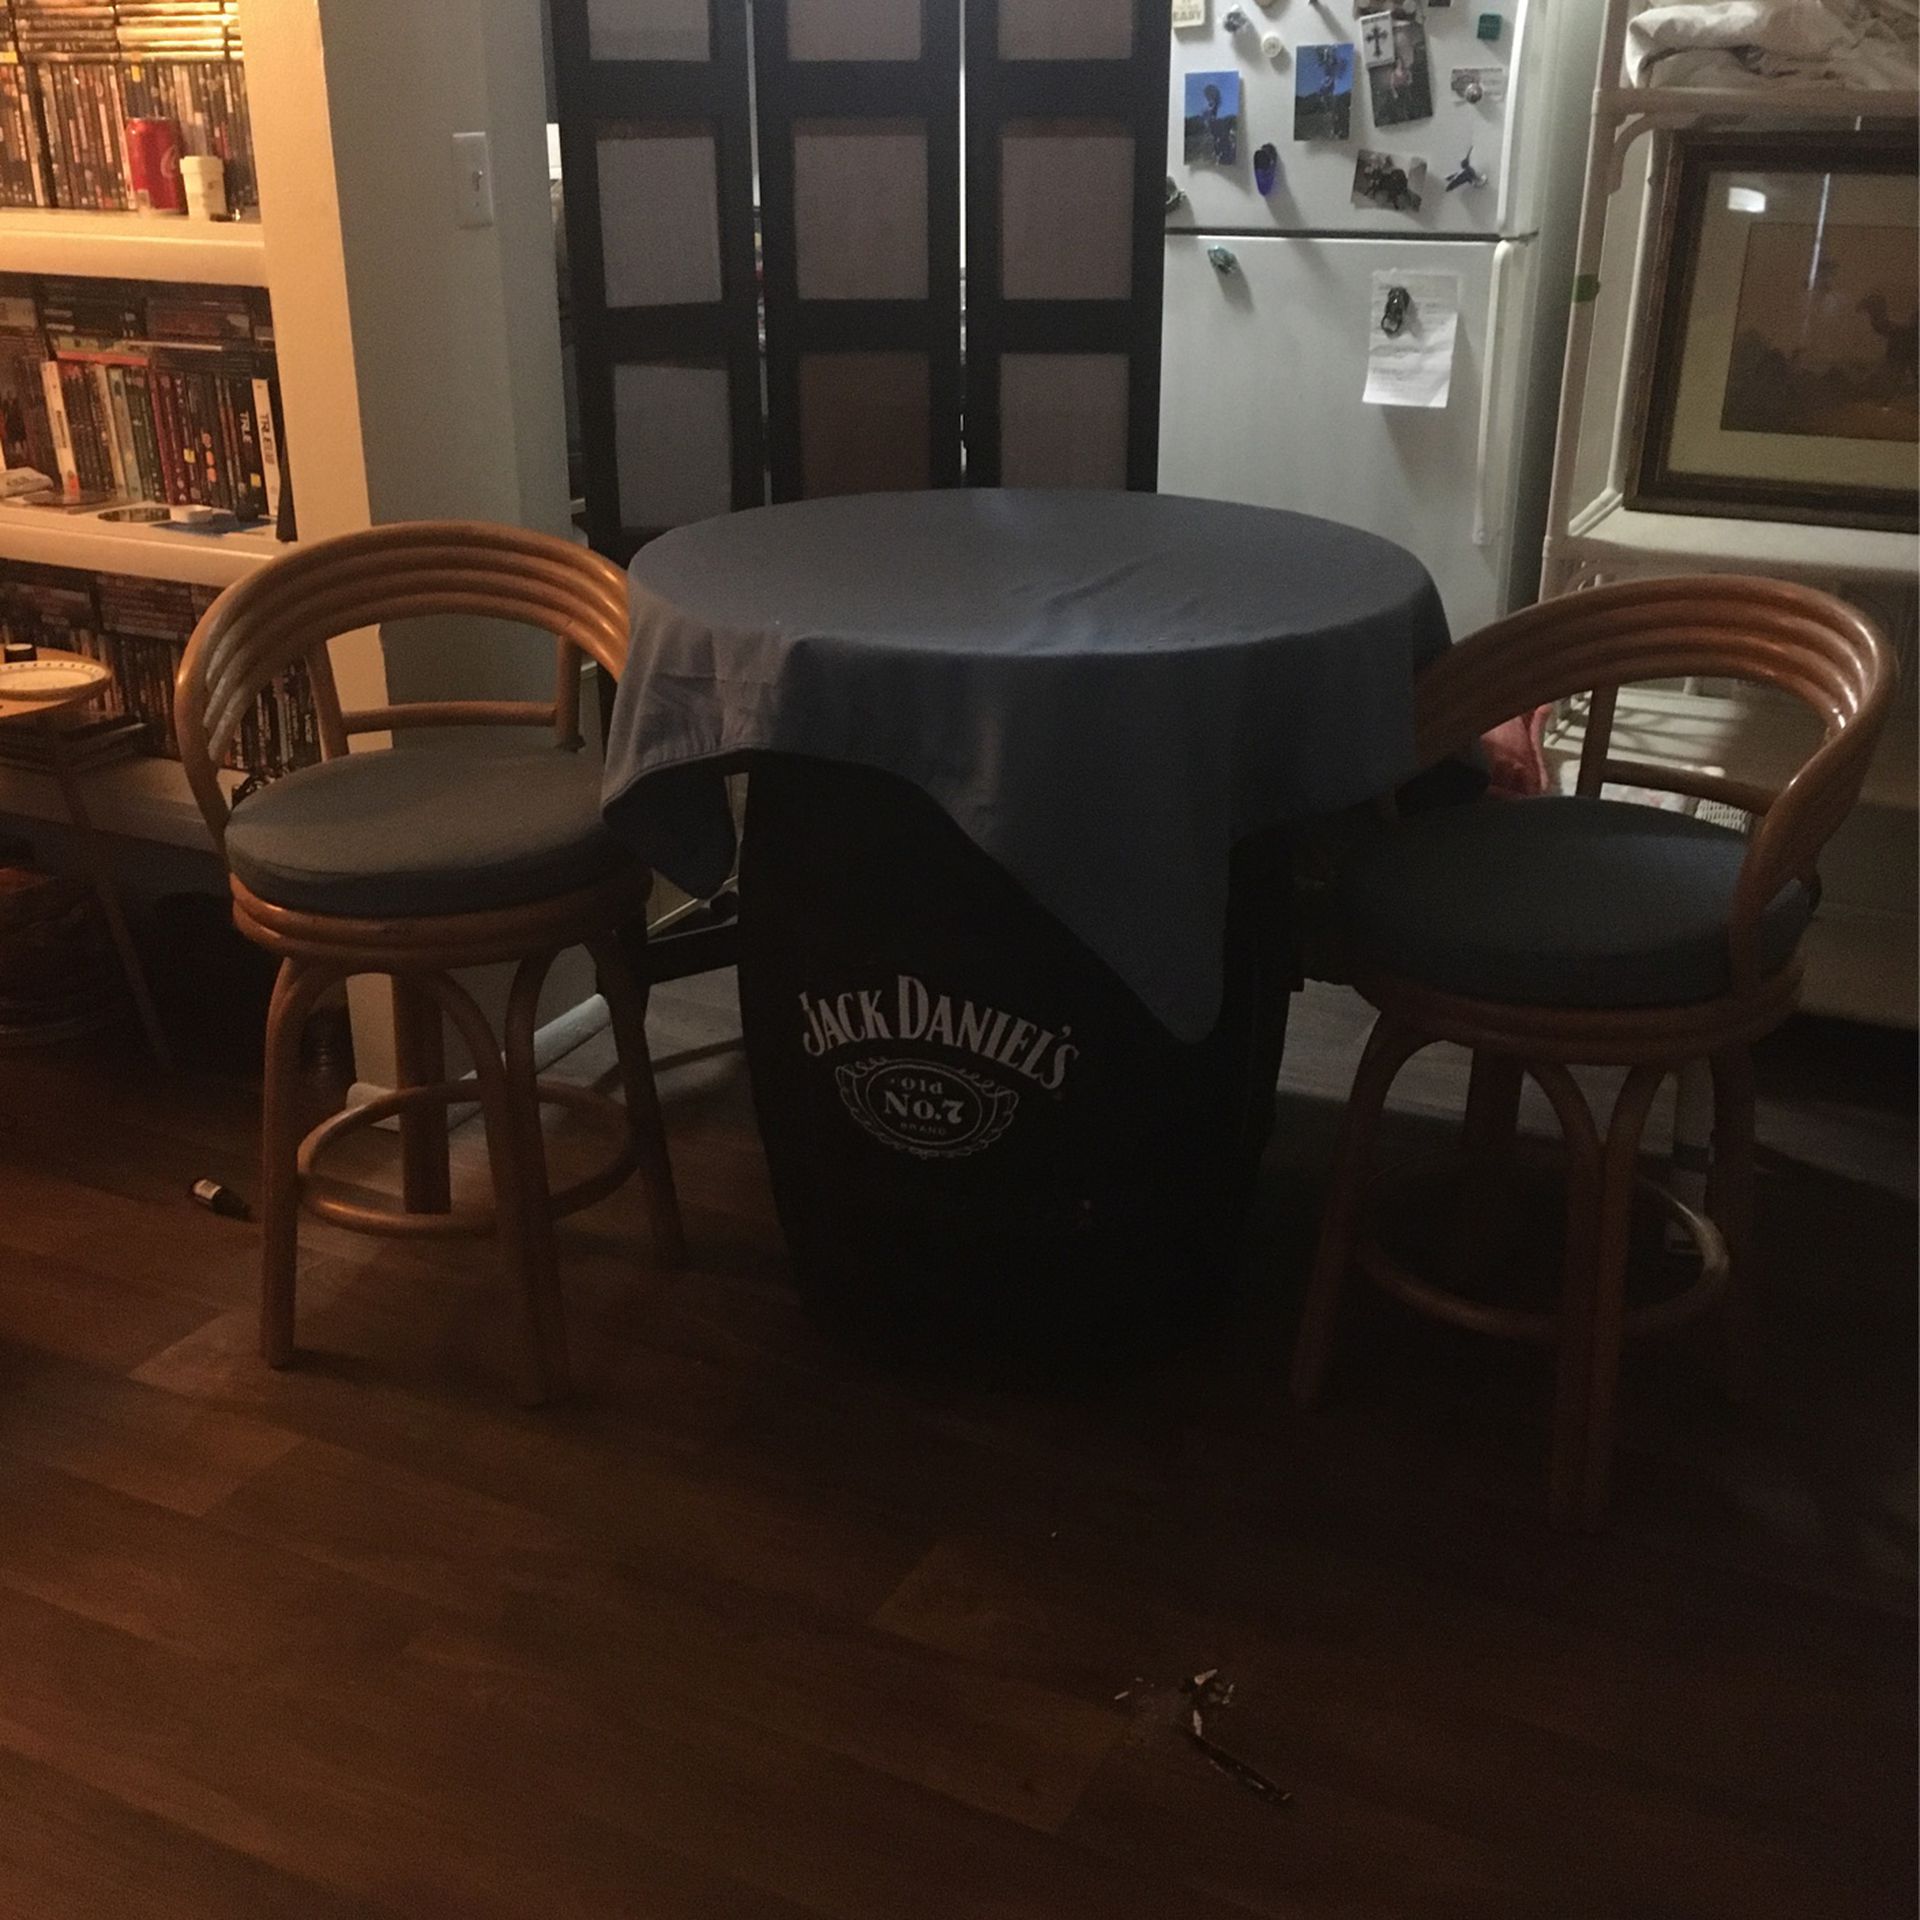 Jack Daniels Table And Bar Stools